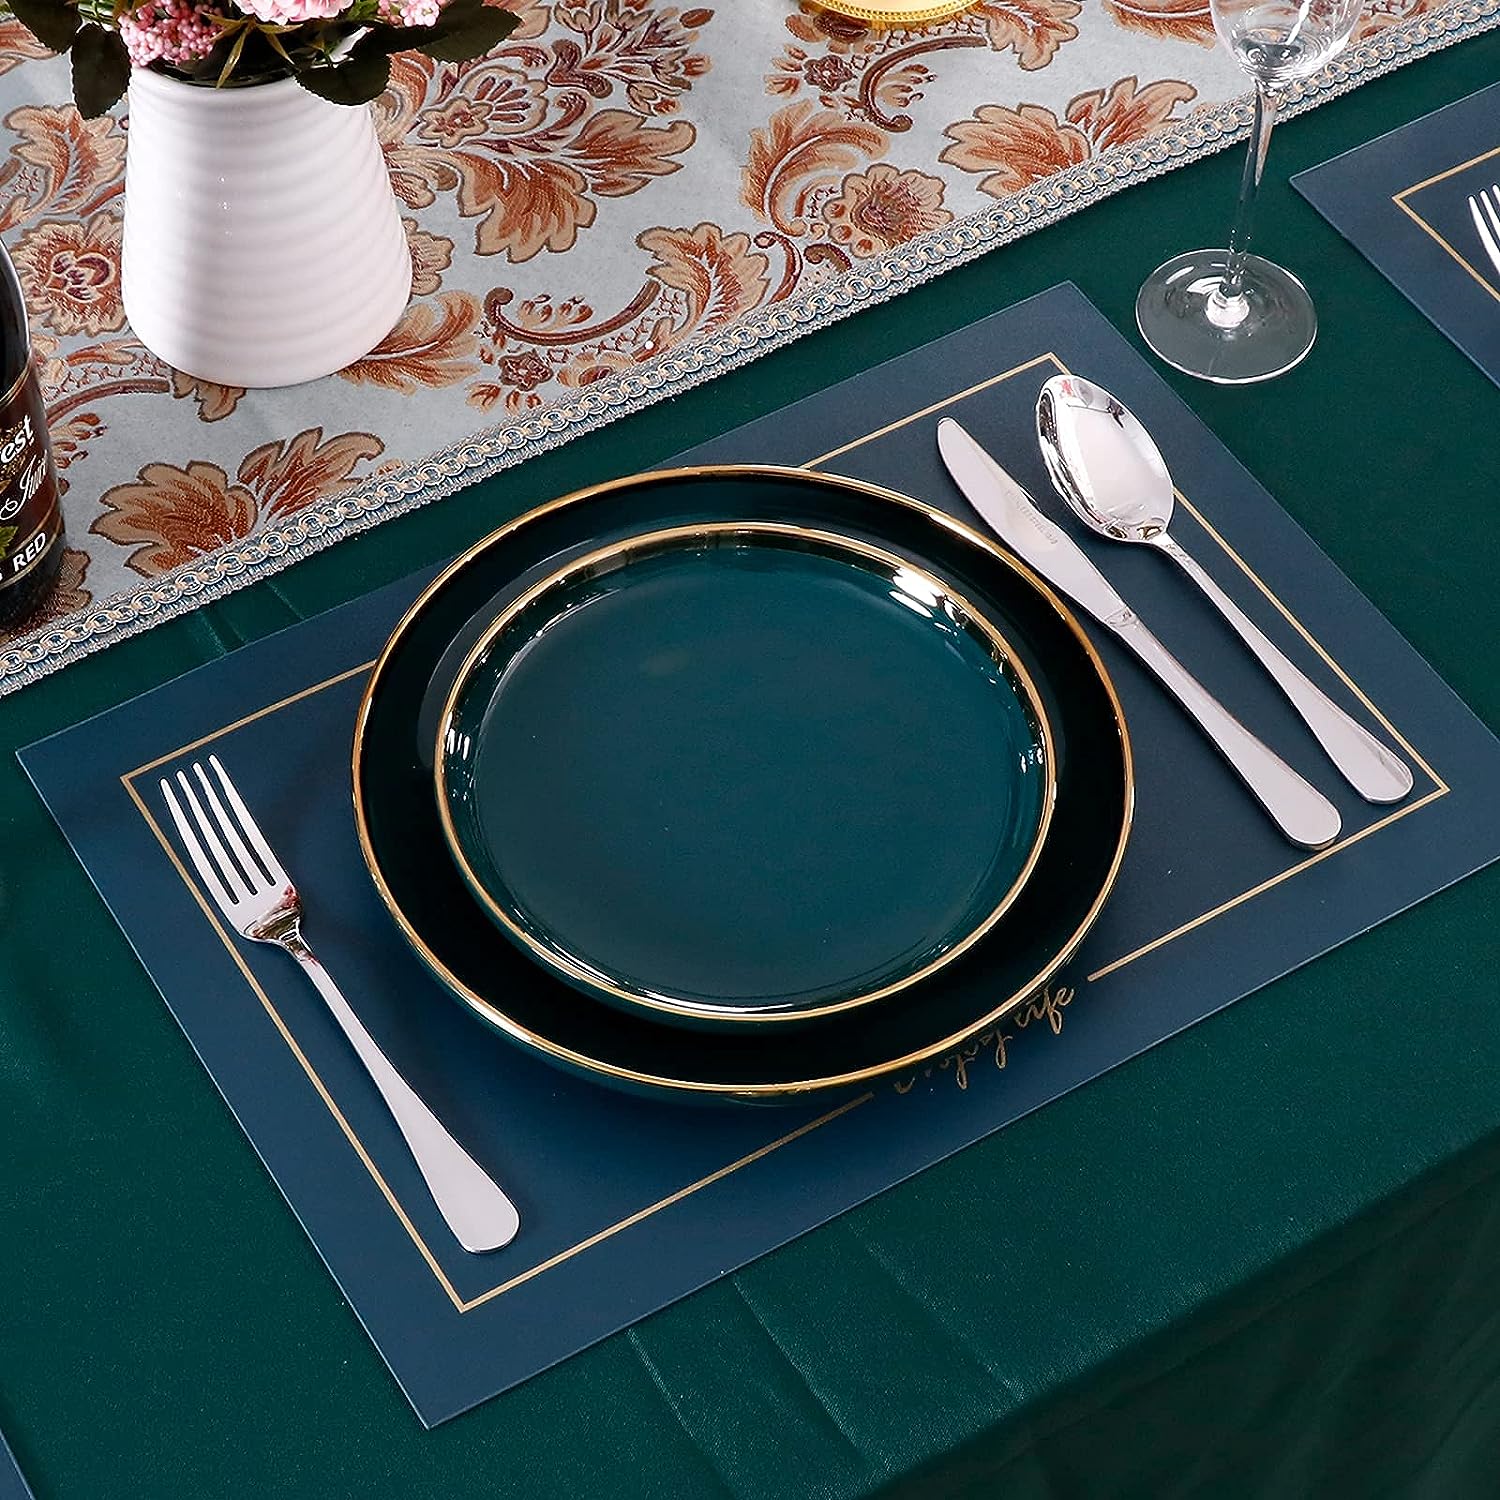 20-Piece Flatware Set, Restaurant Silverware Utensils Service for 4, Stainless Steel Home Tableware Cutlery, Dishwasher Safe